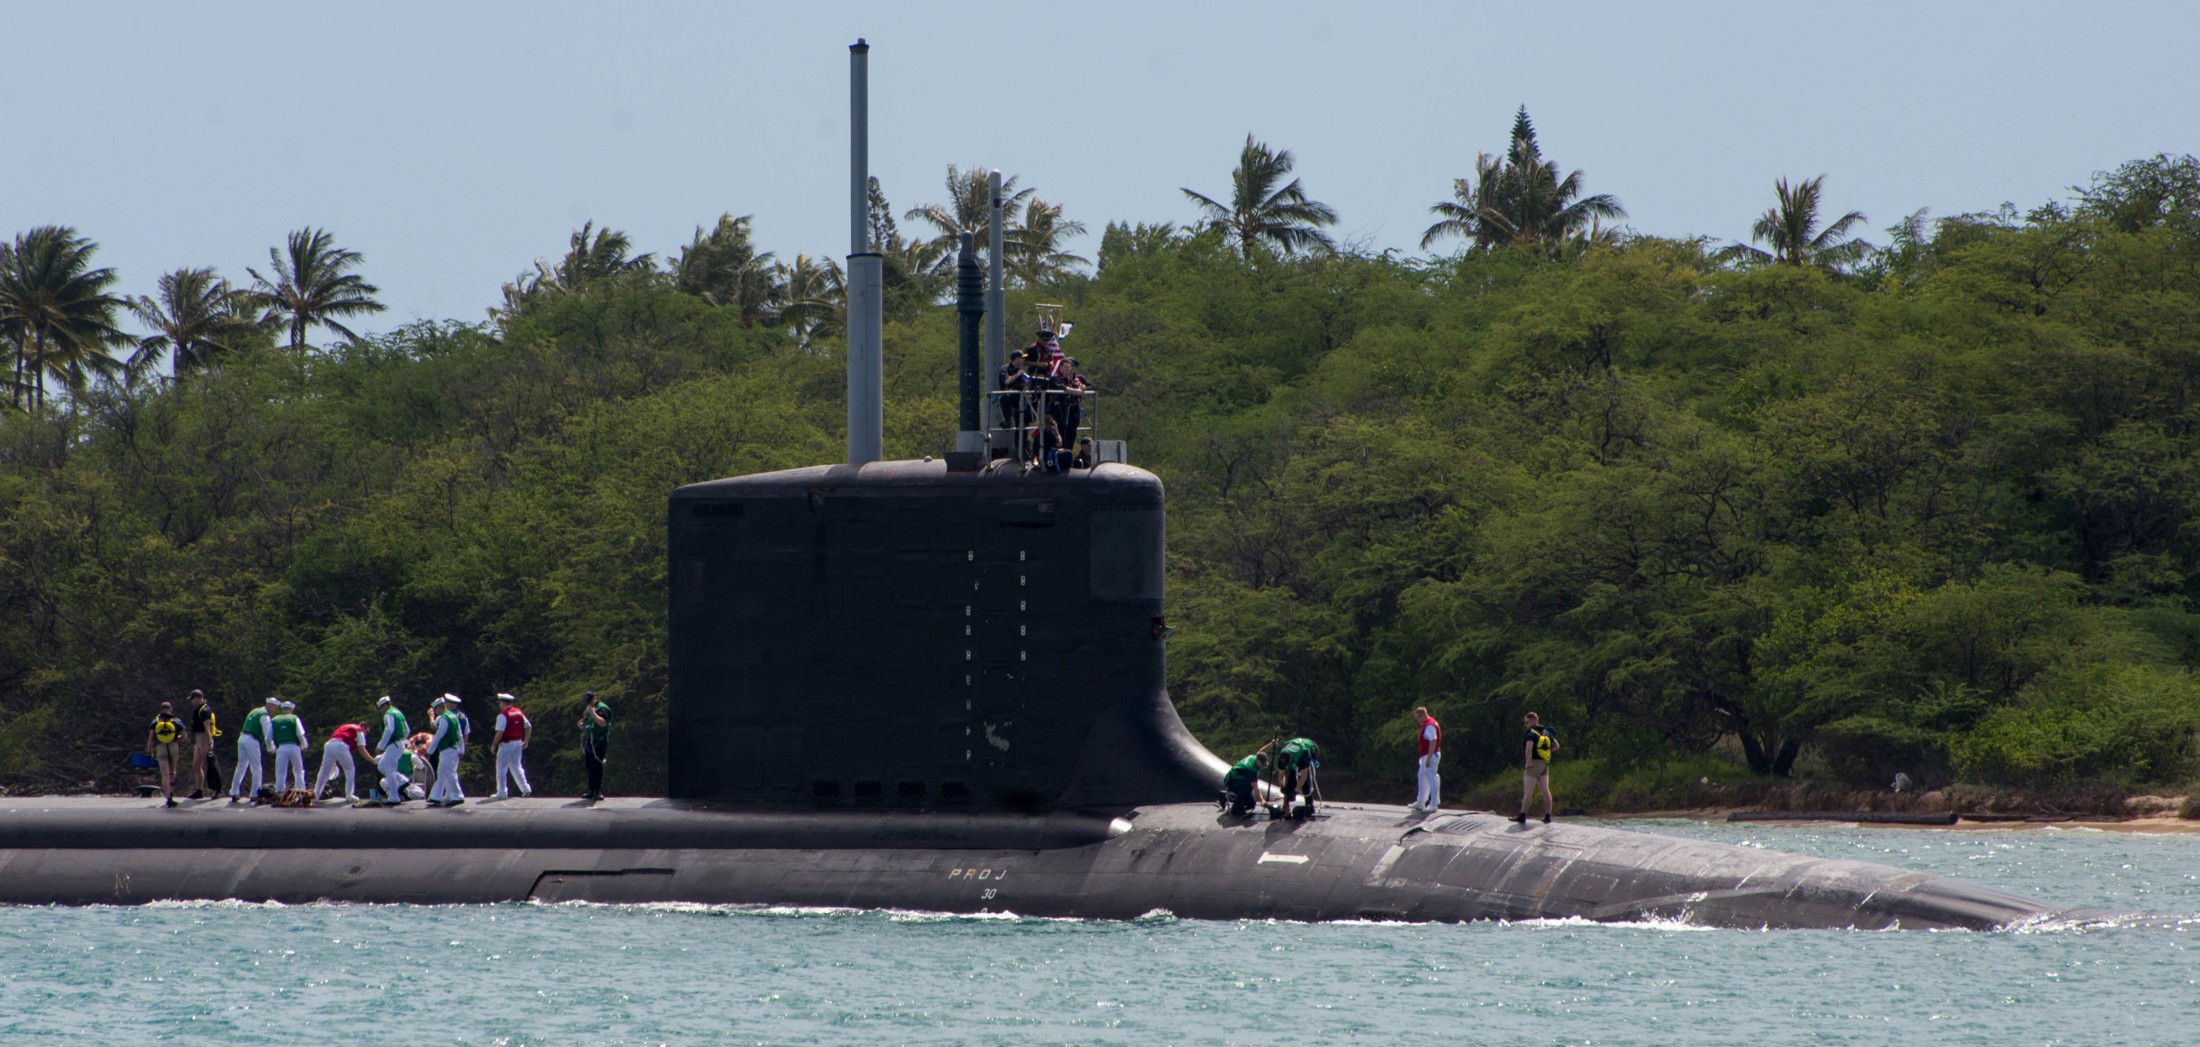 ssn-782 uss mississippi virginia class attack submarine us navy 04 pearl harbor hawaii